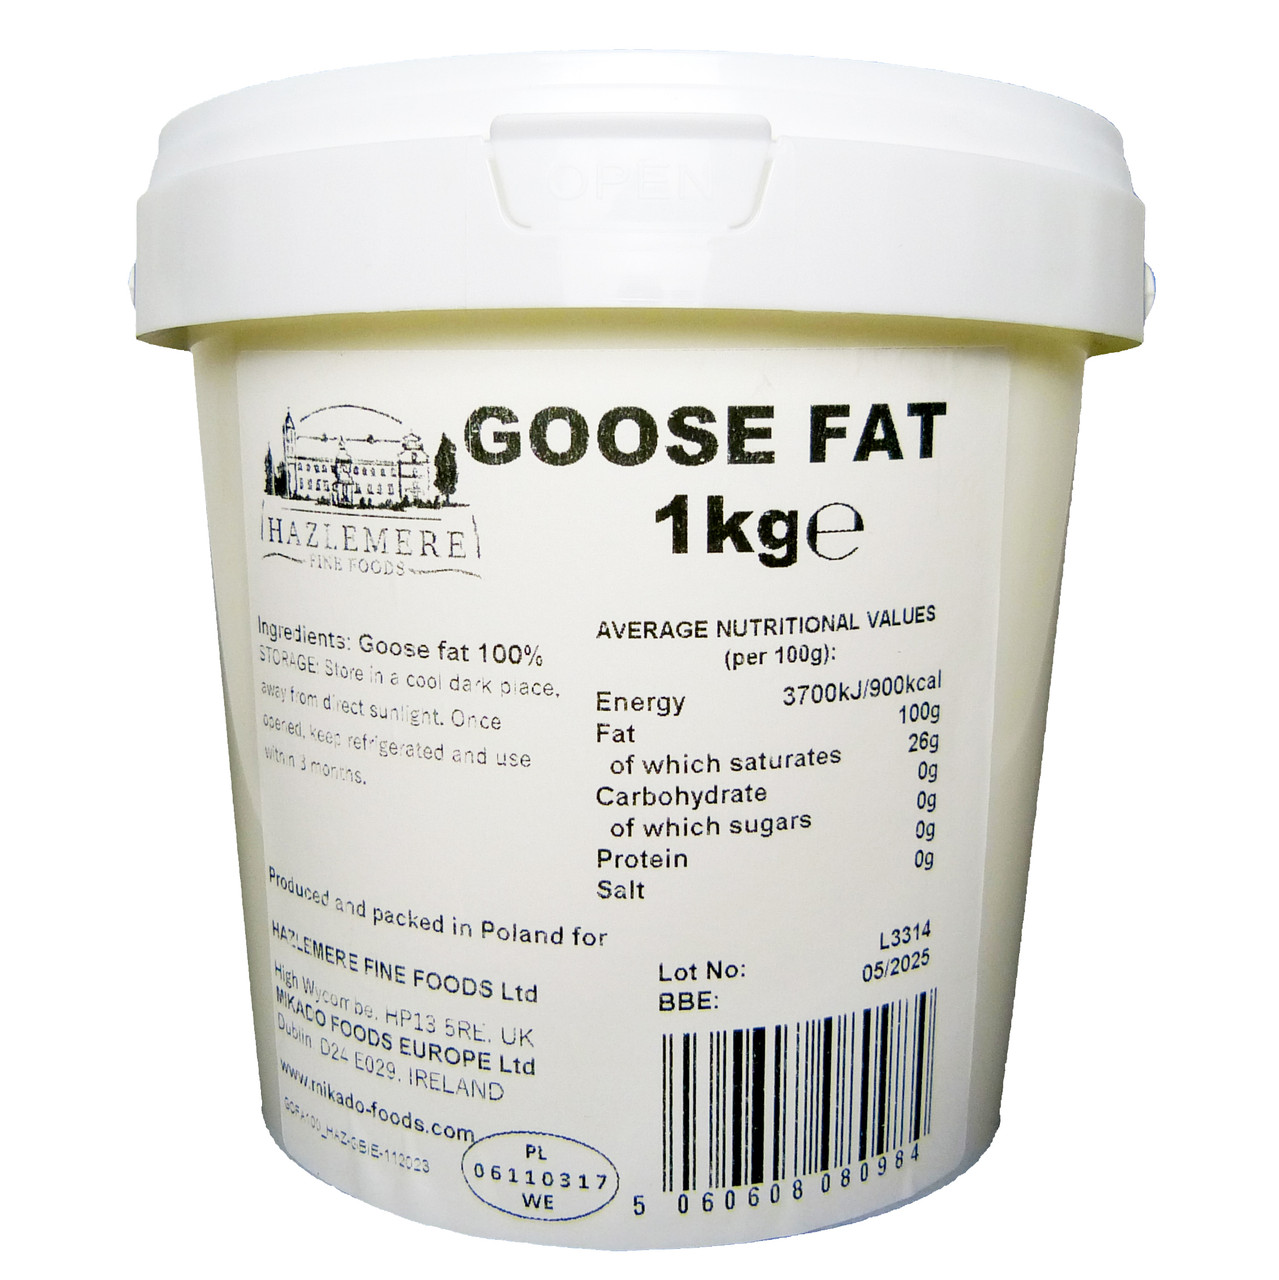 Hazlemere Goose Fat 1kg tub